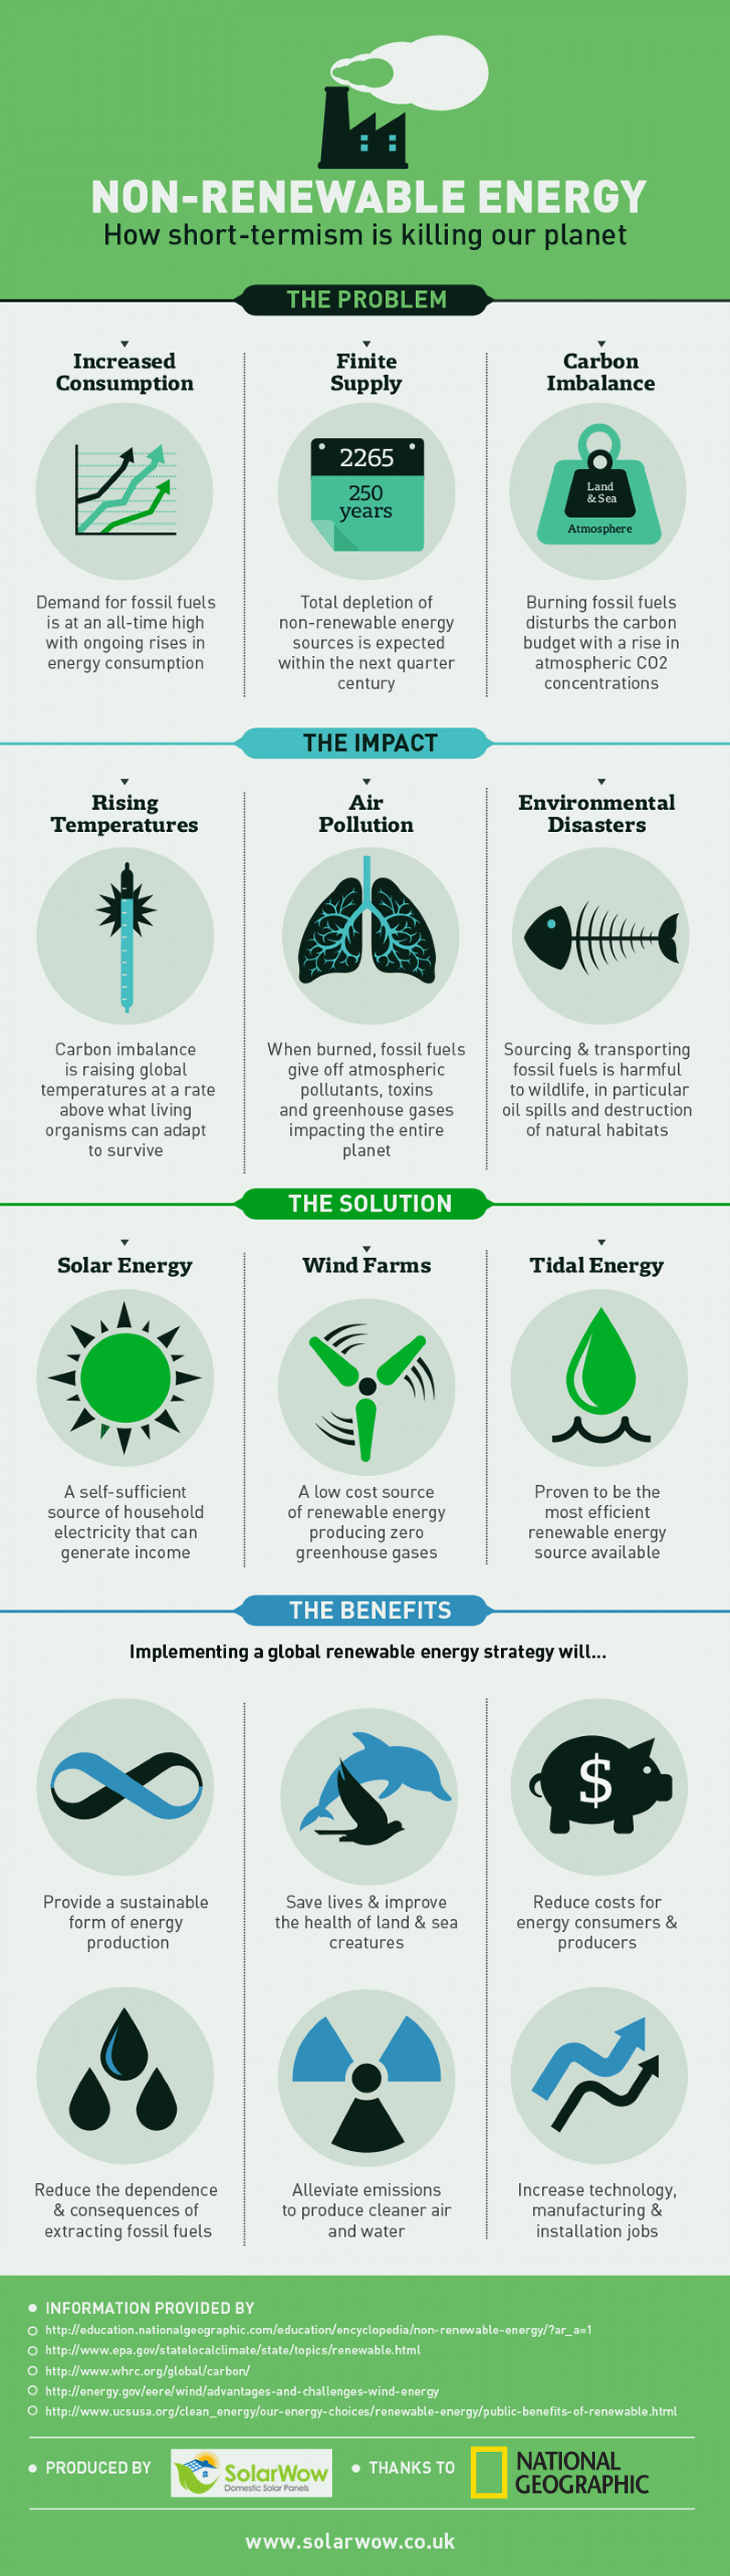 Non-Renewable Energy How Short-termism is Killing our Planet Infographic